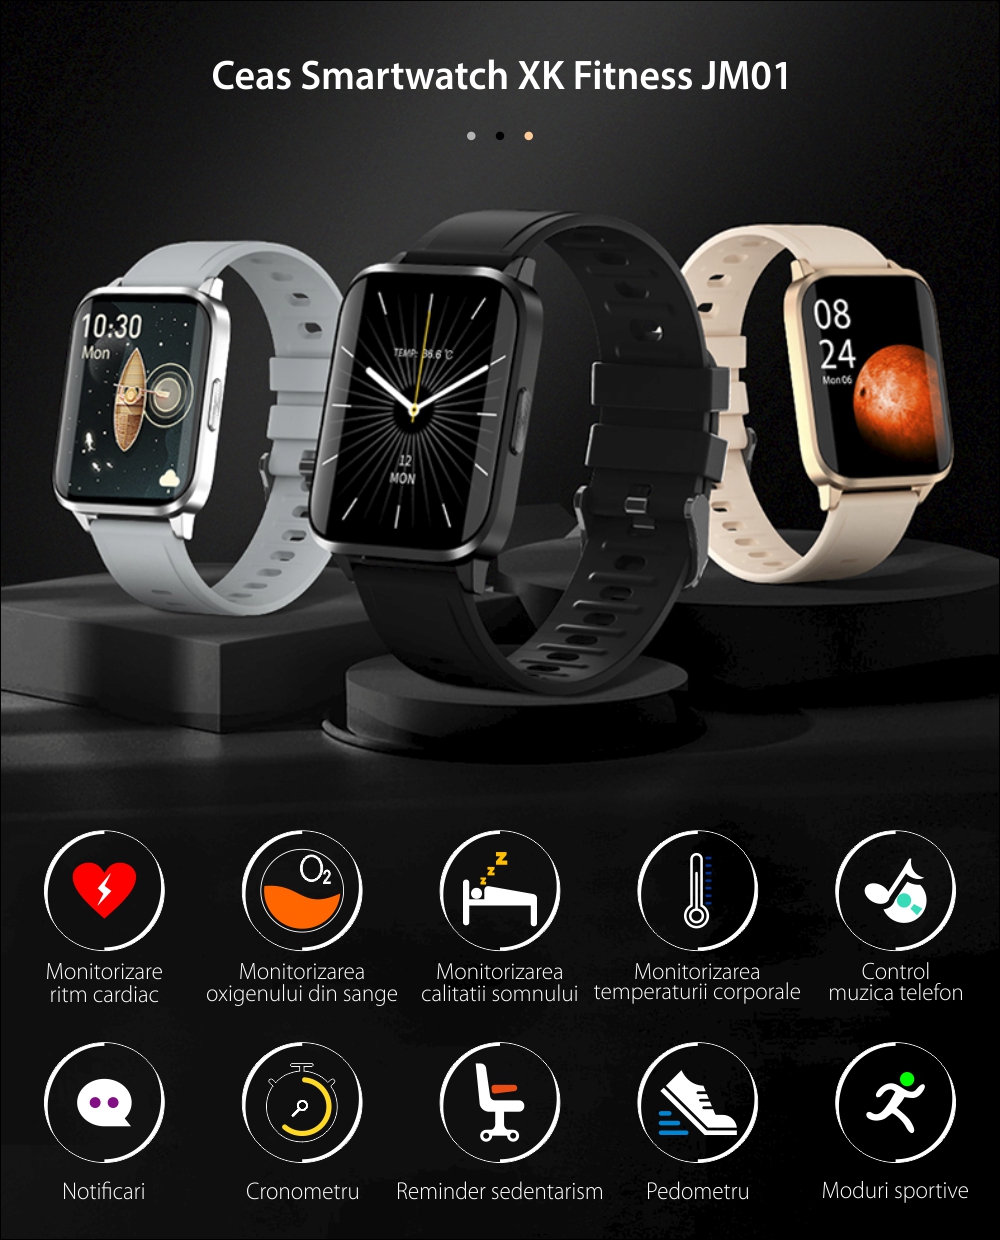 Ceas Smartwatch XK Fitness JM01 cu Display 1.69 inch, Bluetooth, Functii sanatate, Pedometru, Distanta, Moduri sport, Silicon, Roz